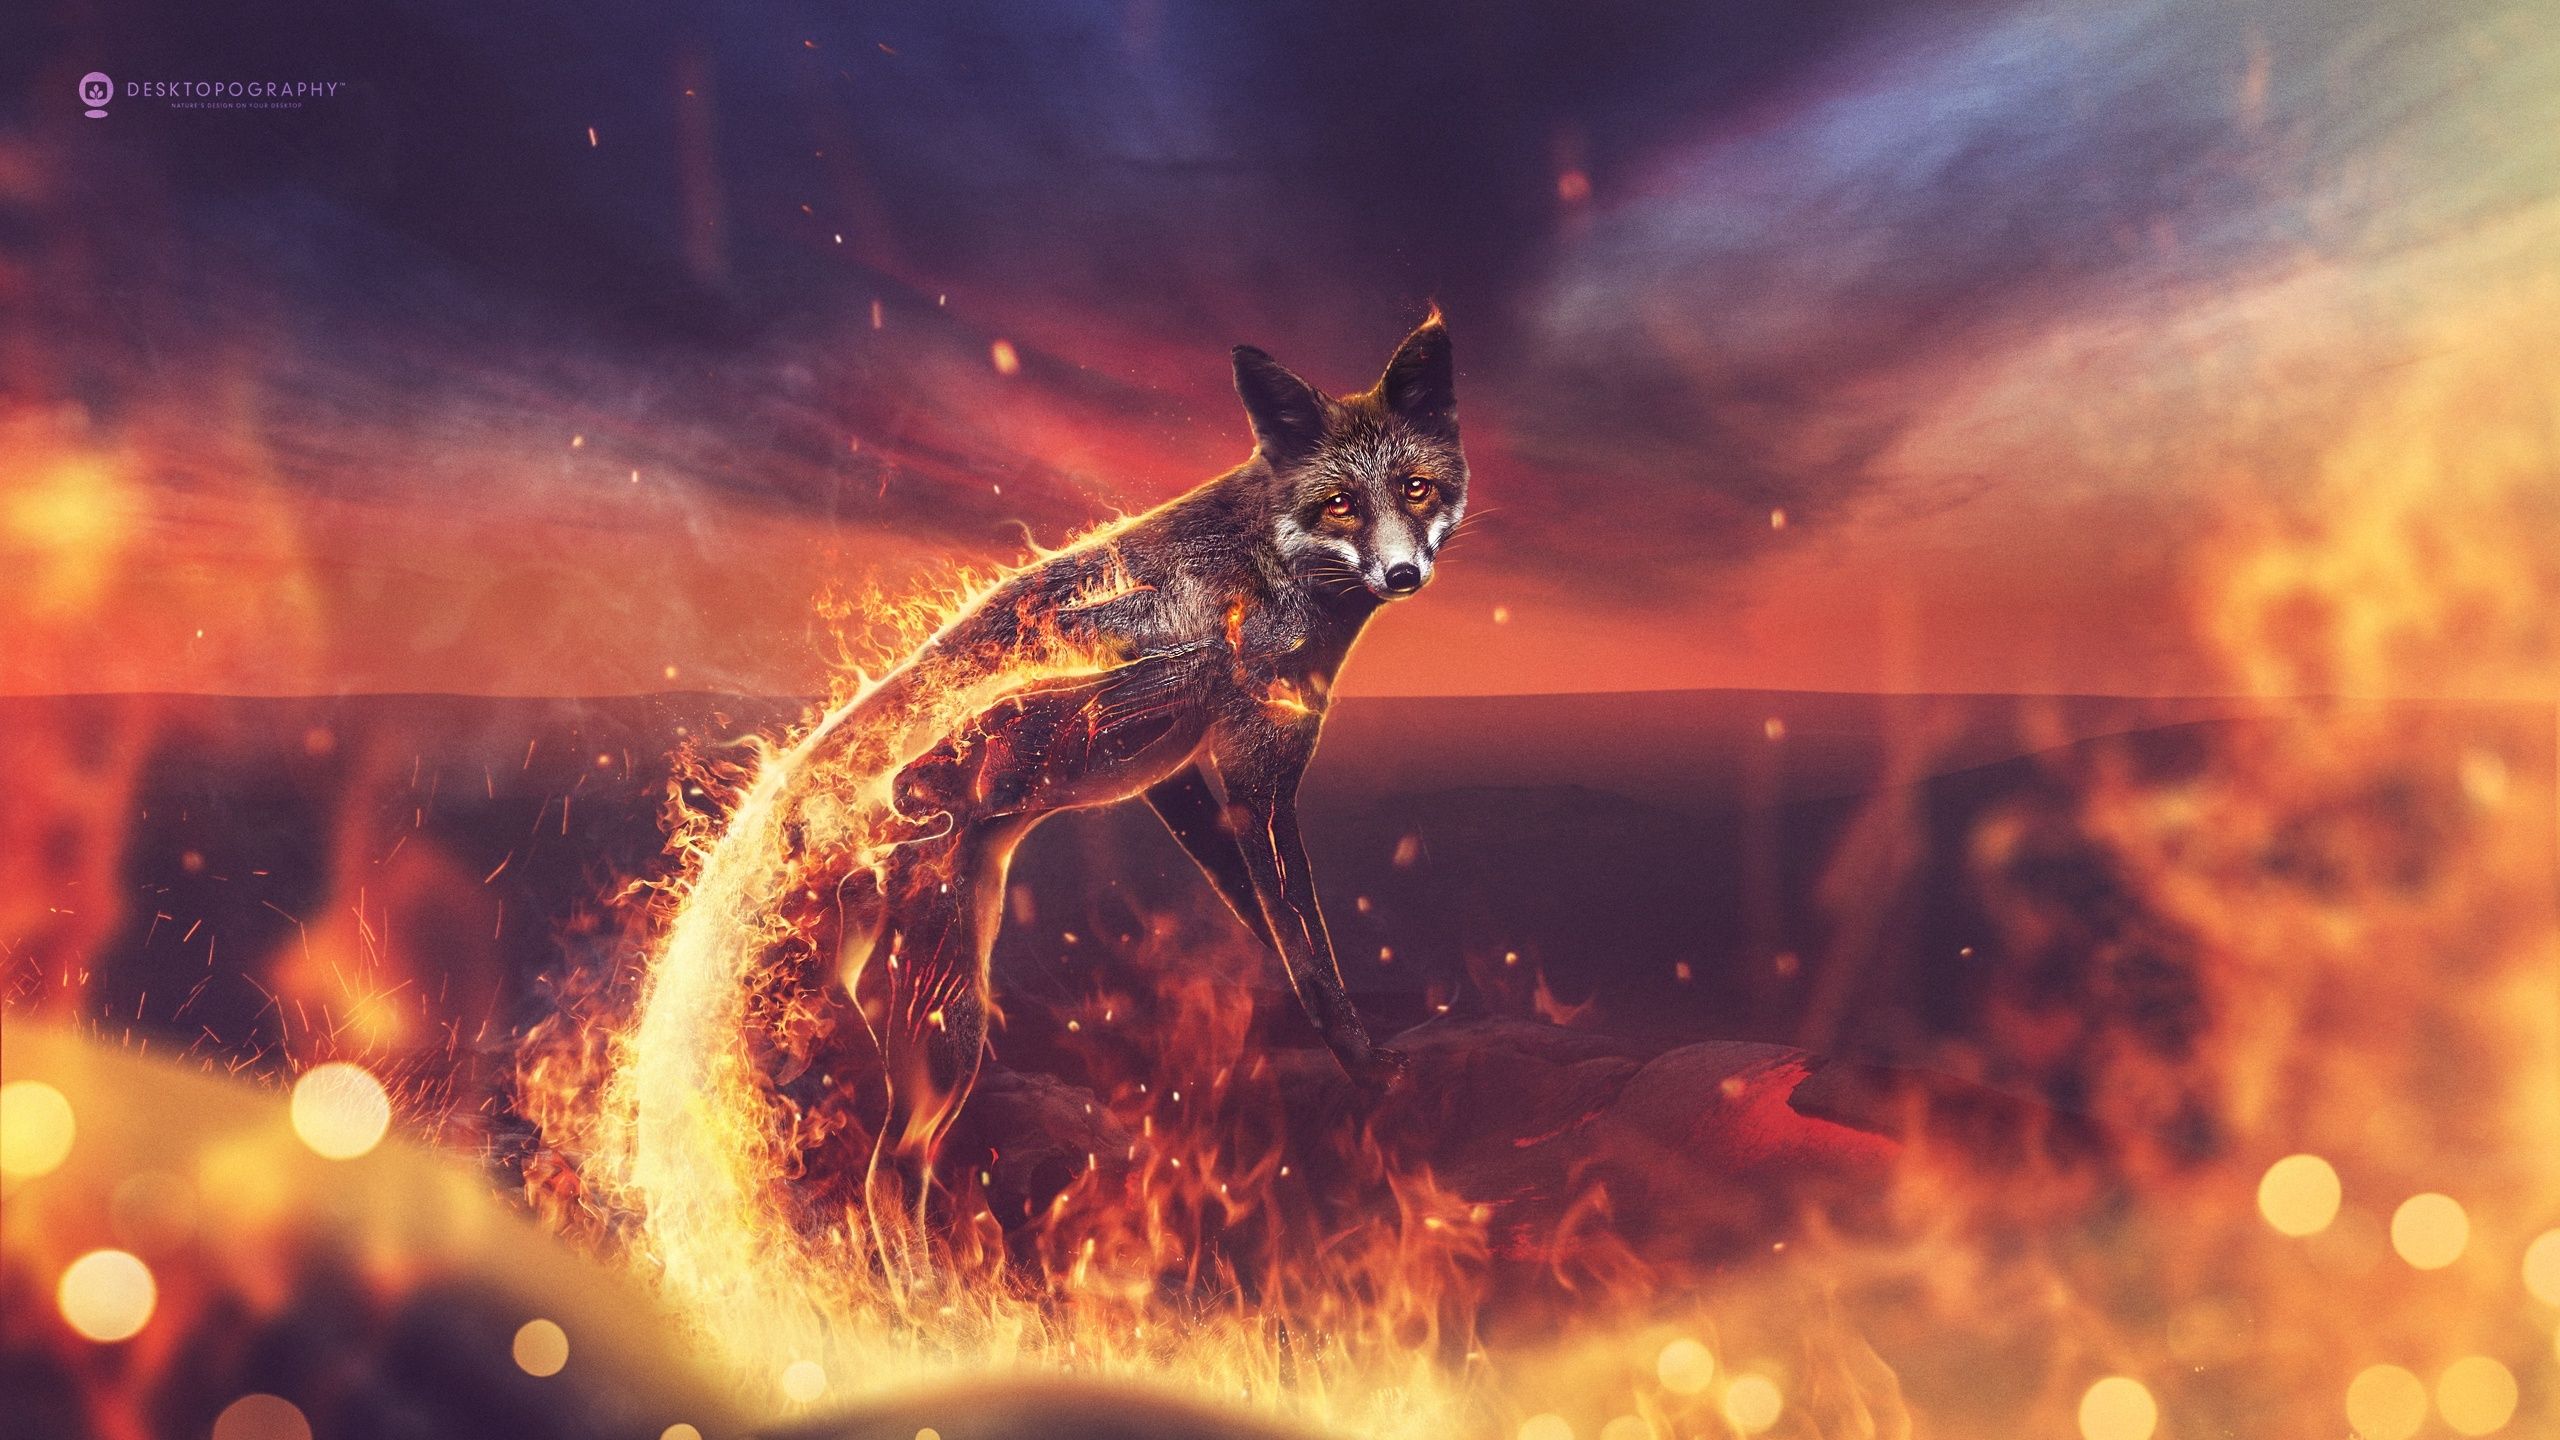 Fire Fox Wallpaper in jpg format for free download